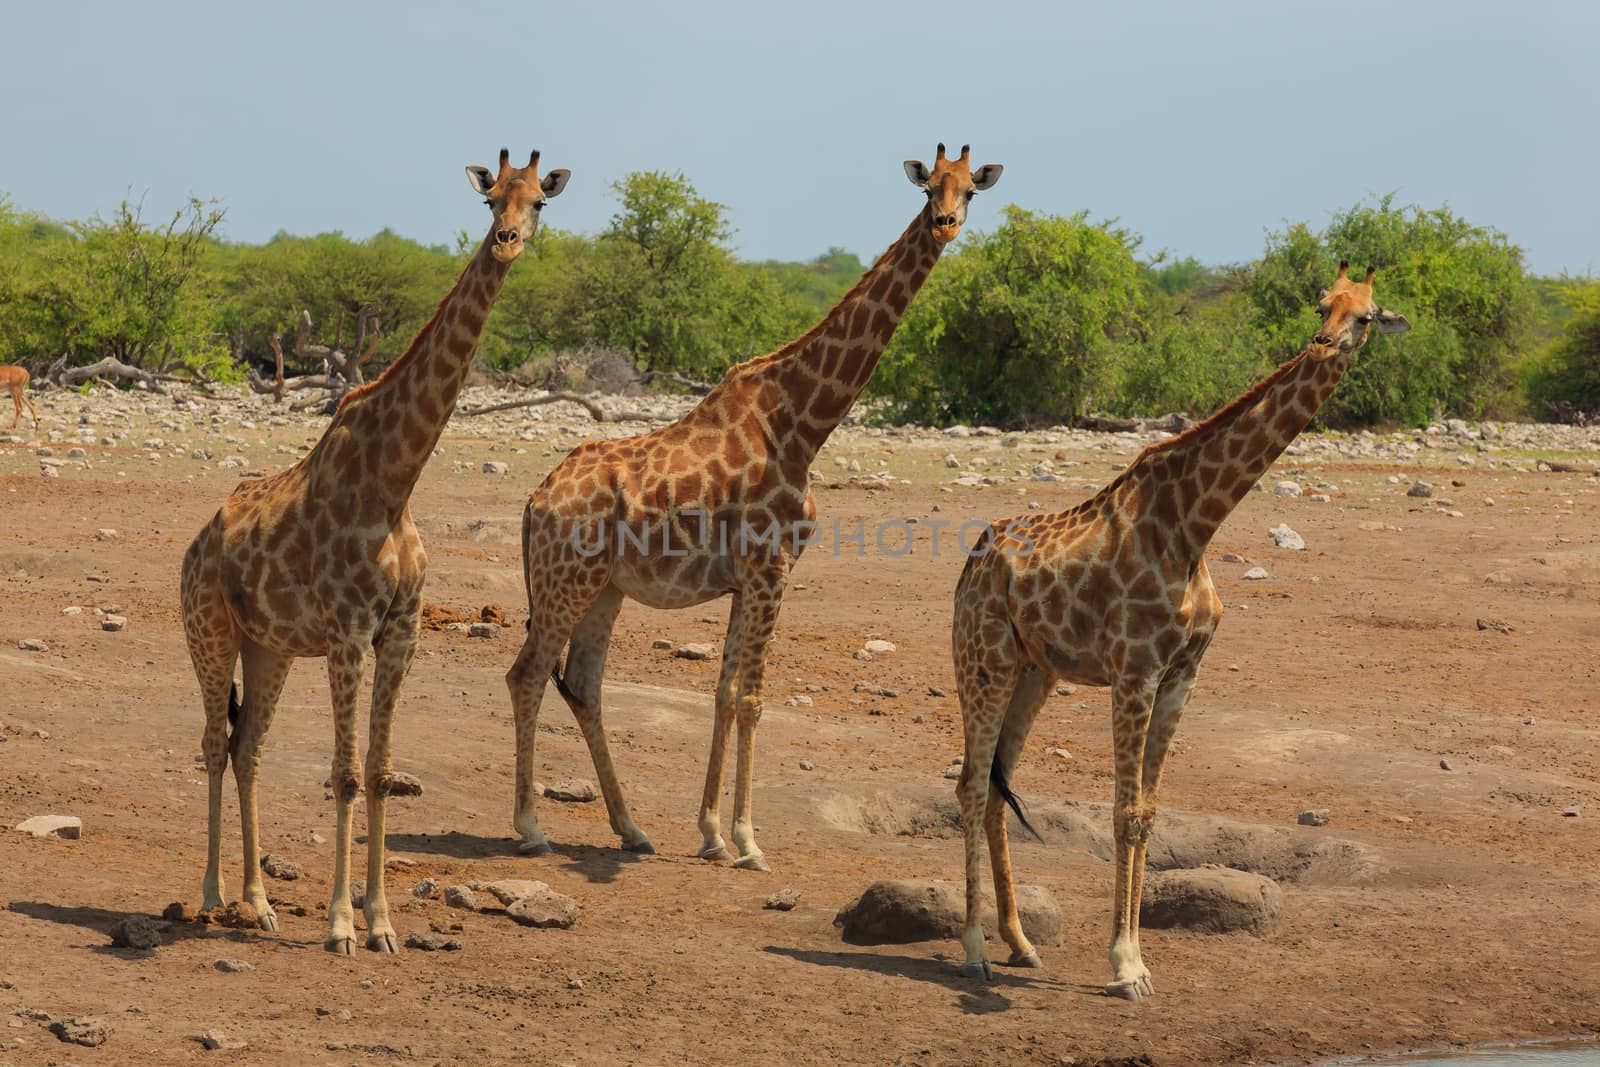 Herd of giraffes by elleon